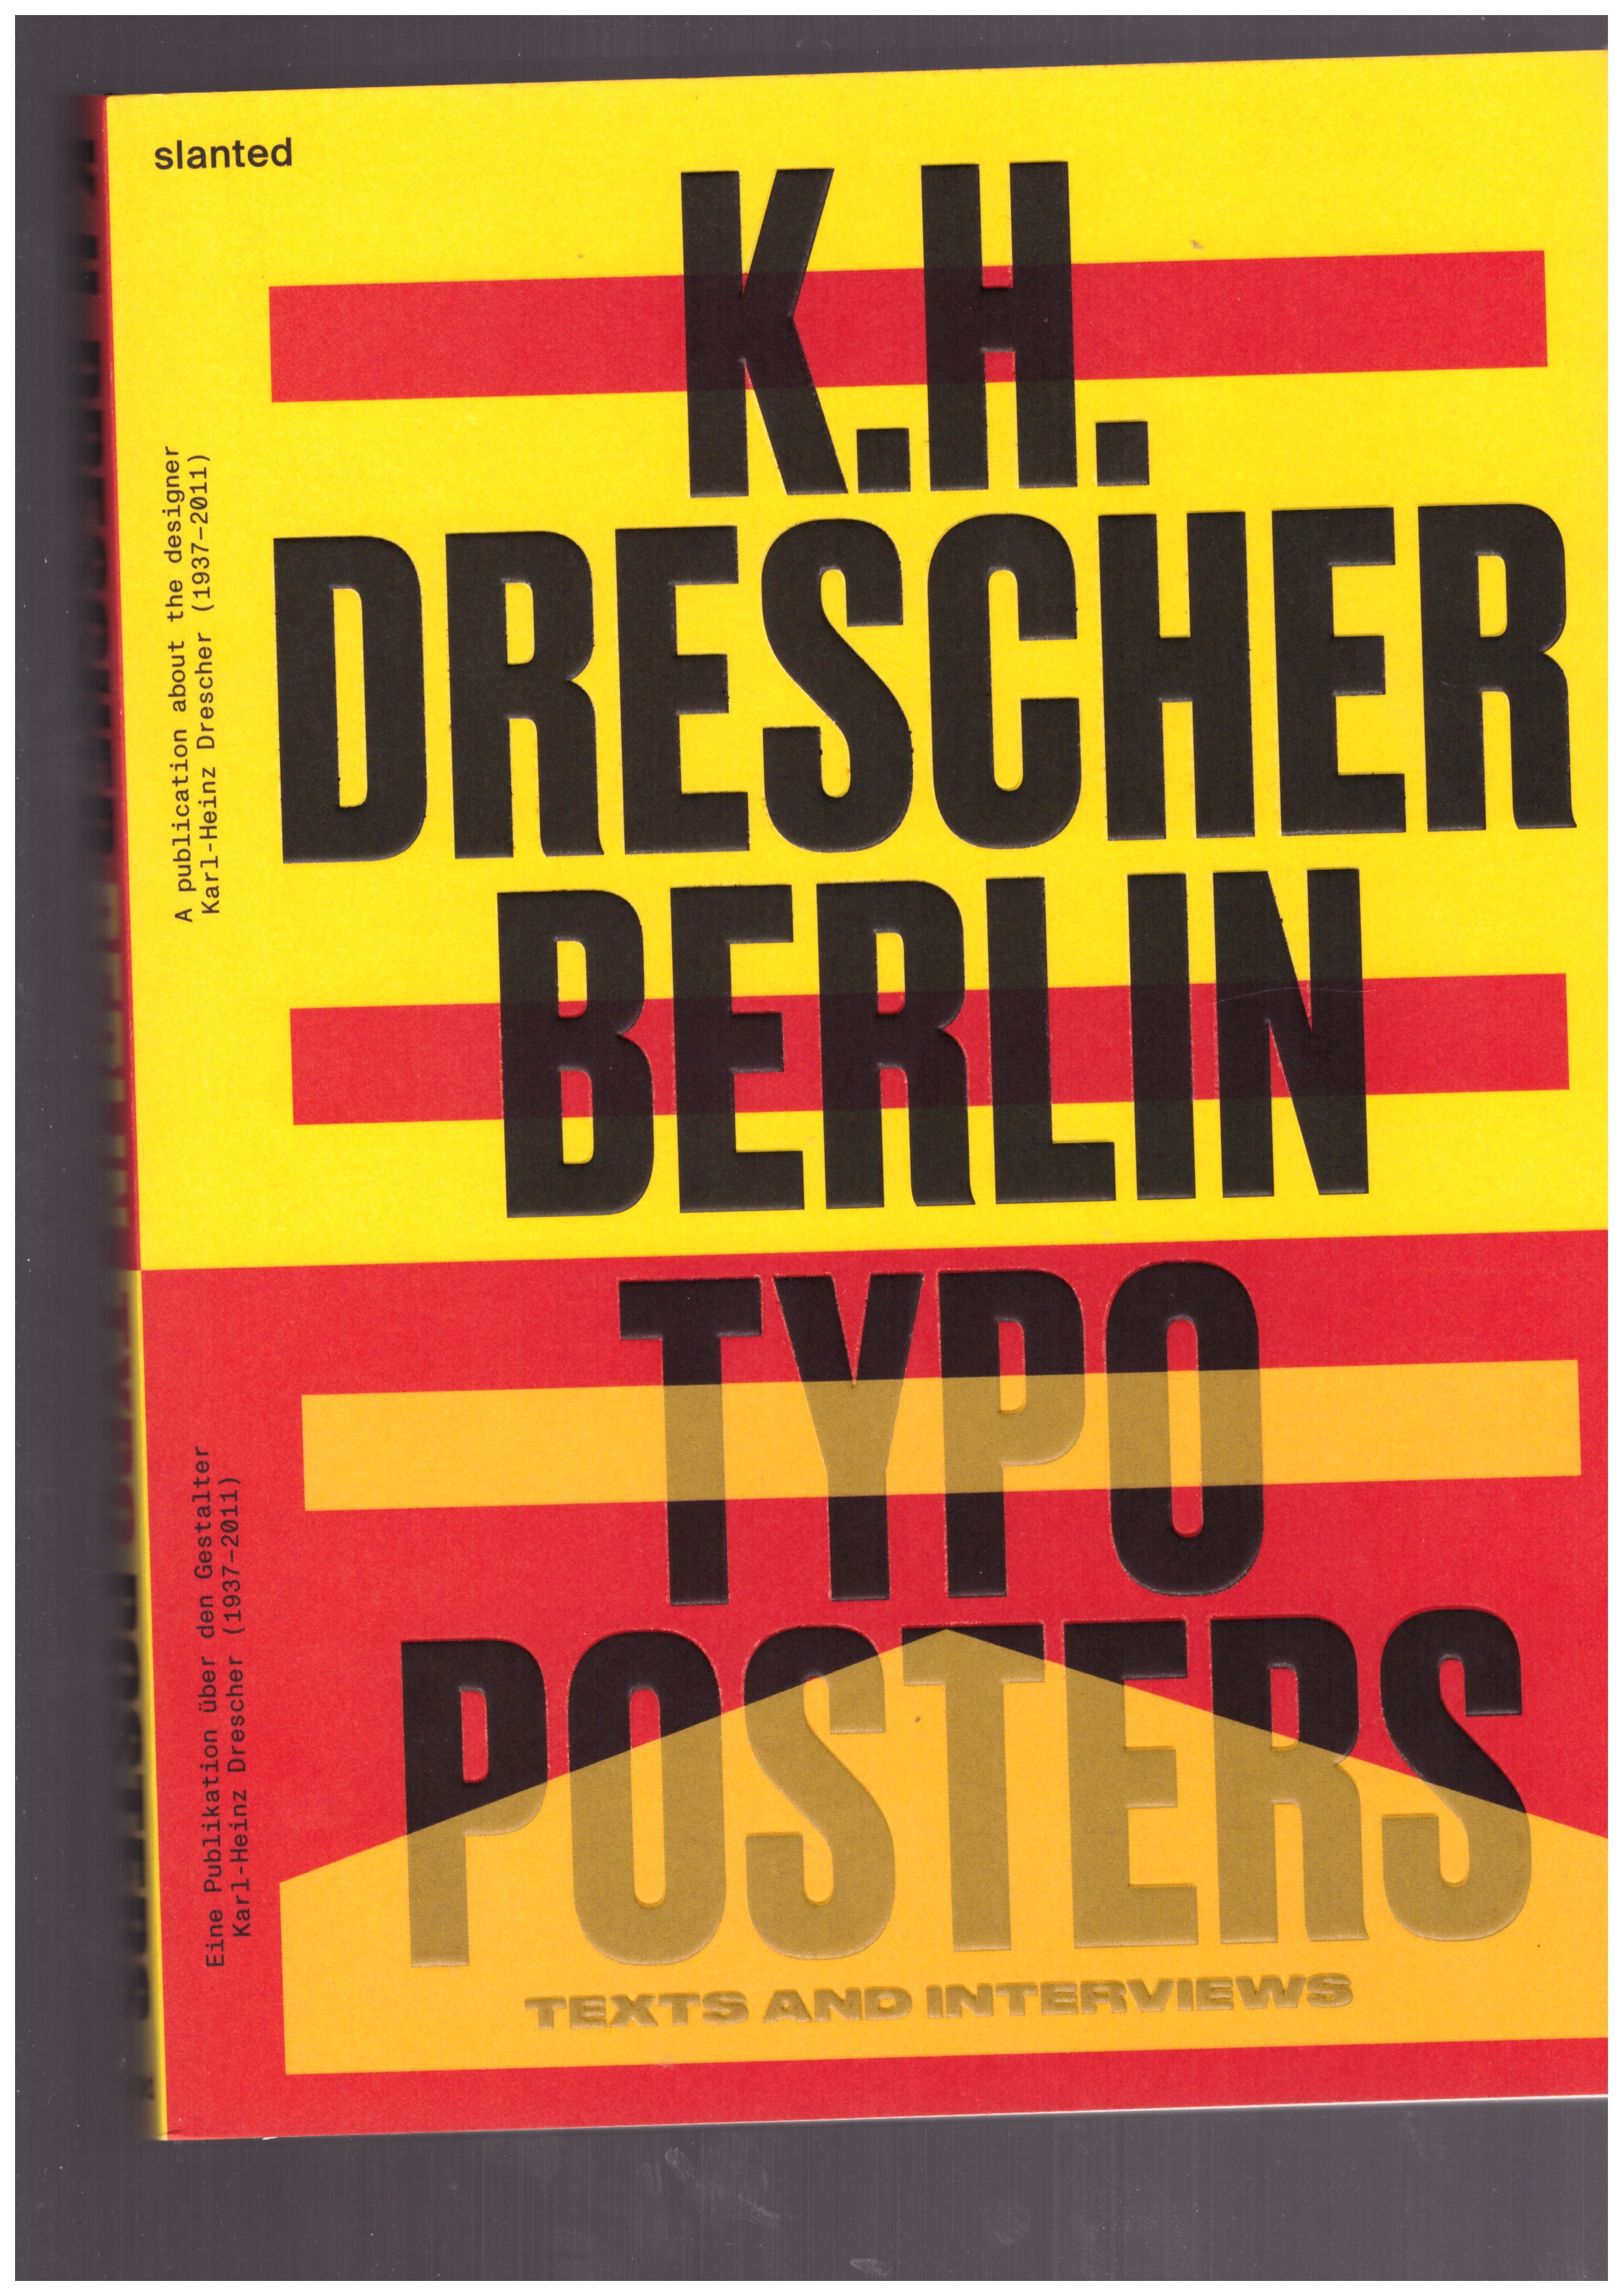 DRESCHER, Karl-Heinz - Berlin Typo Posters, Texts, and Interviews